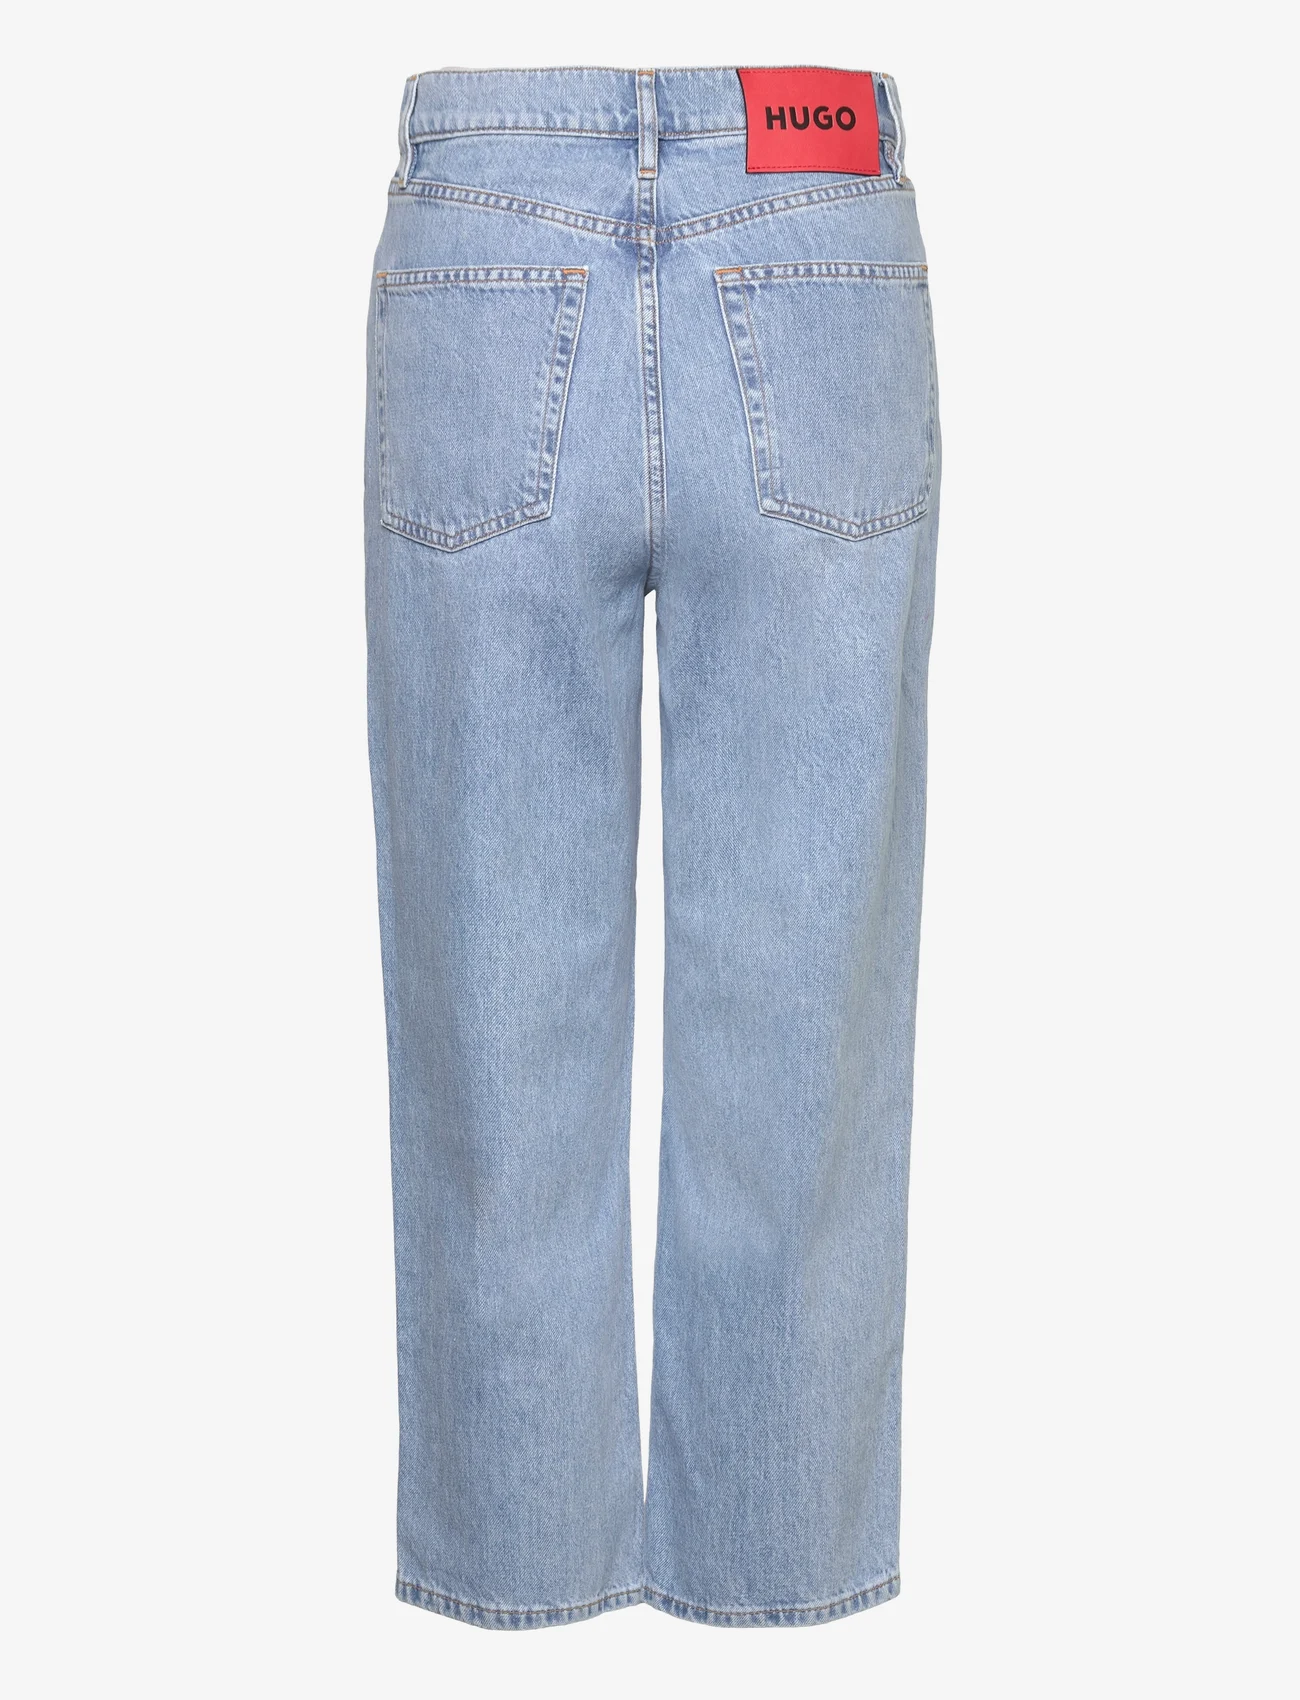 HUGO - 933 - raka jeans - turquoise/aqua - 1